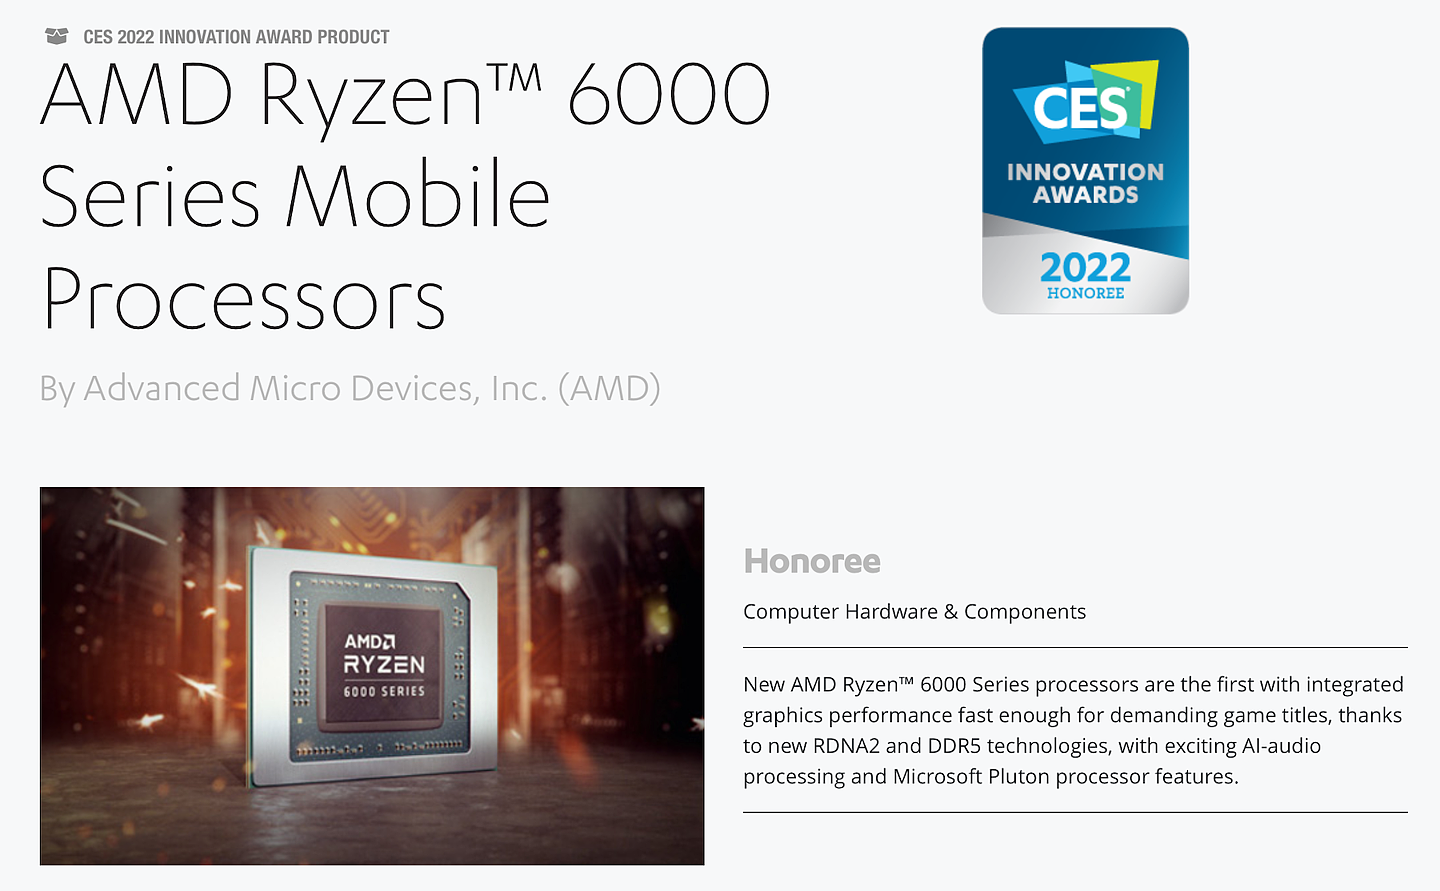 AMD 锐龙 6000 移动处理器获 CES 创新奖：RDNA2 核显 + DDR5 内存带来强大游戏性能 - 1